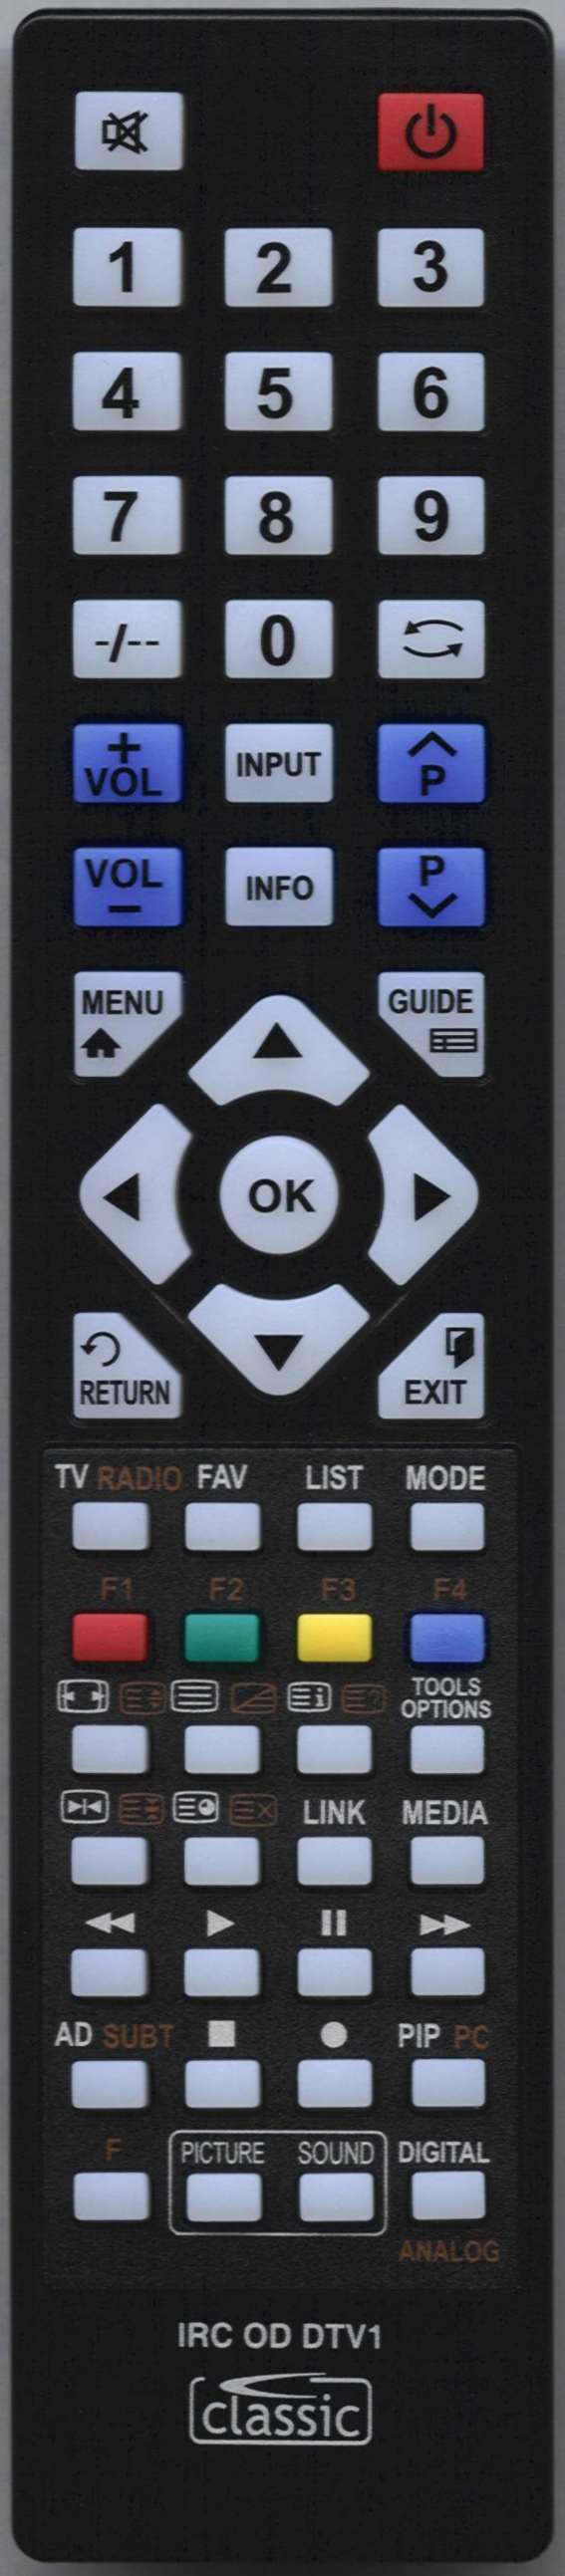 PANASONIC TX32C300E Remote Control